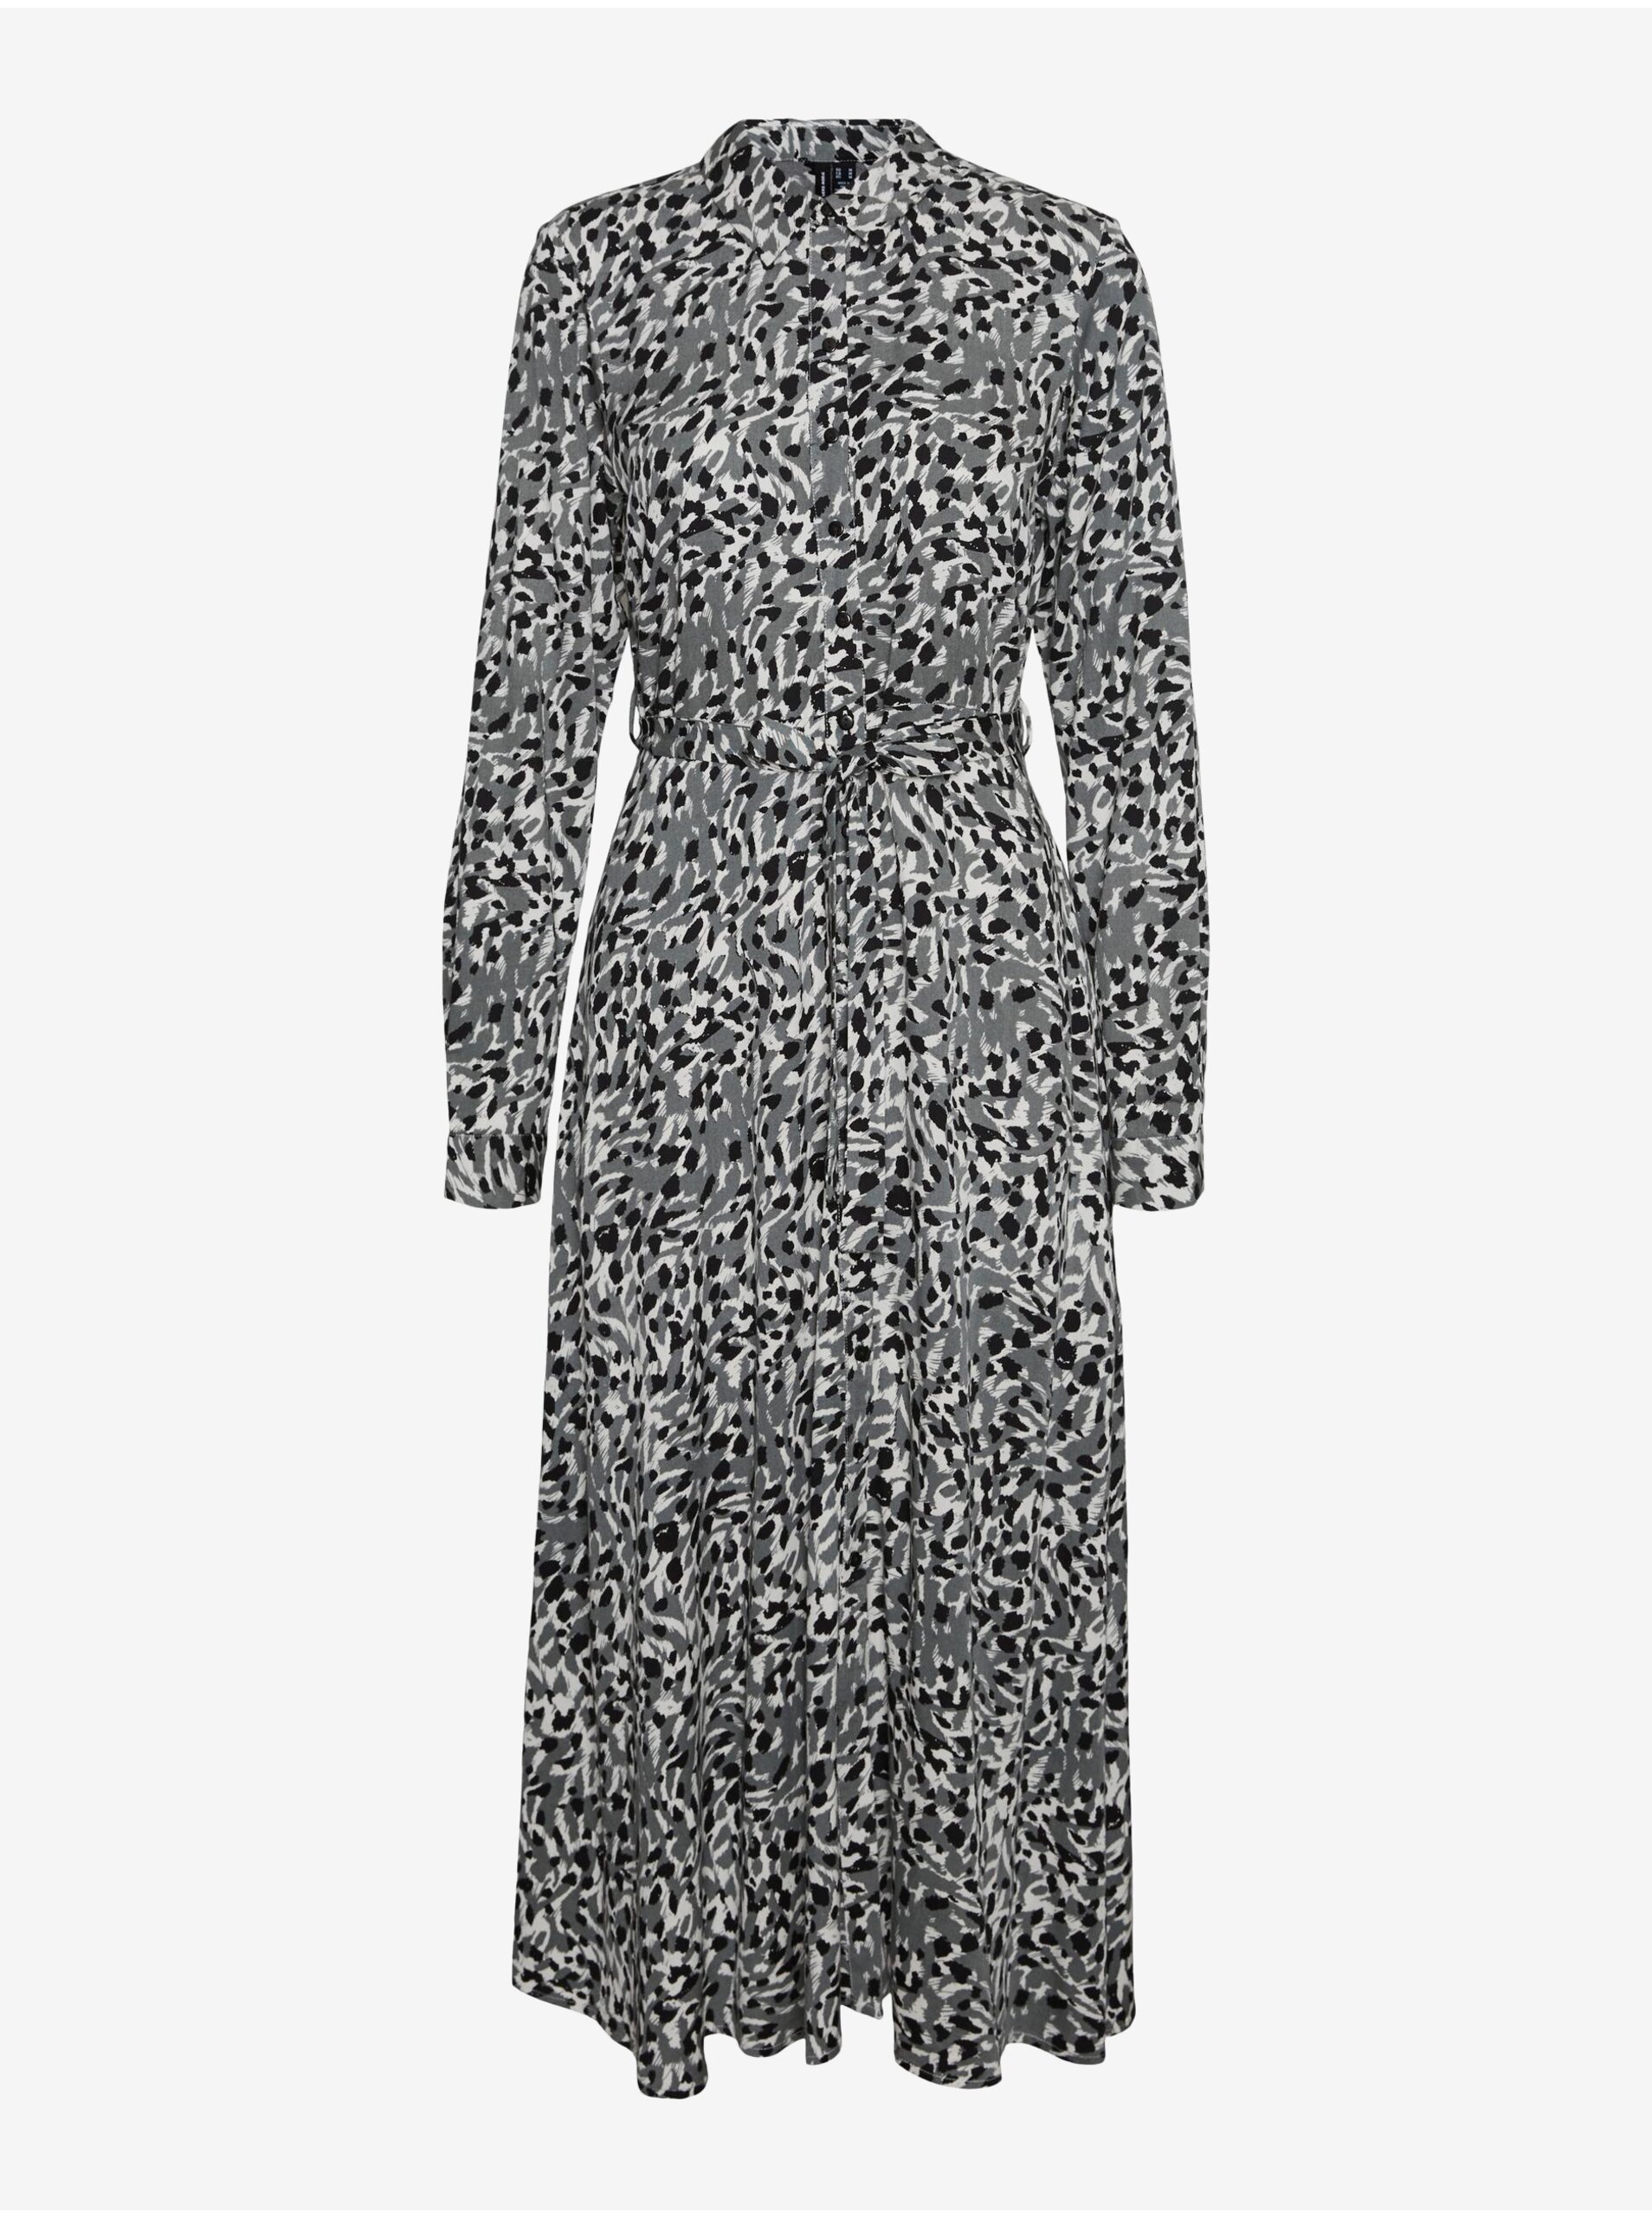 Women's grey patterned shirt dress VERO MODA Deb - Women